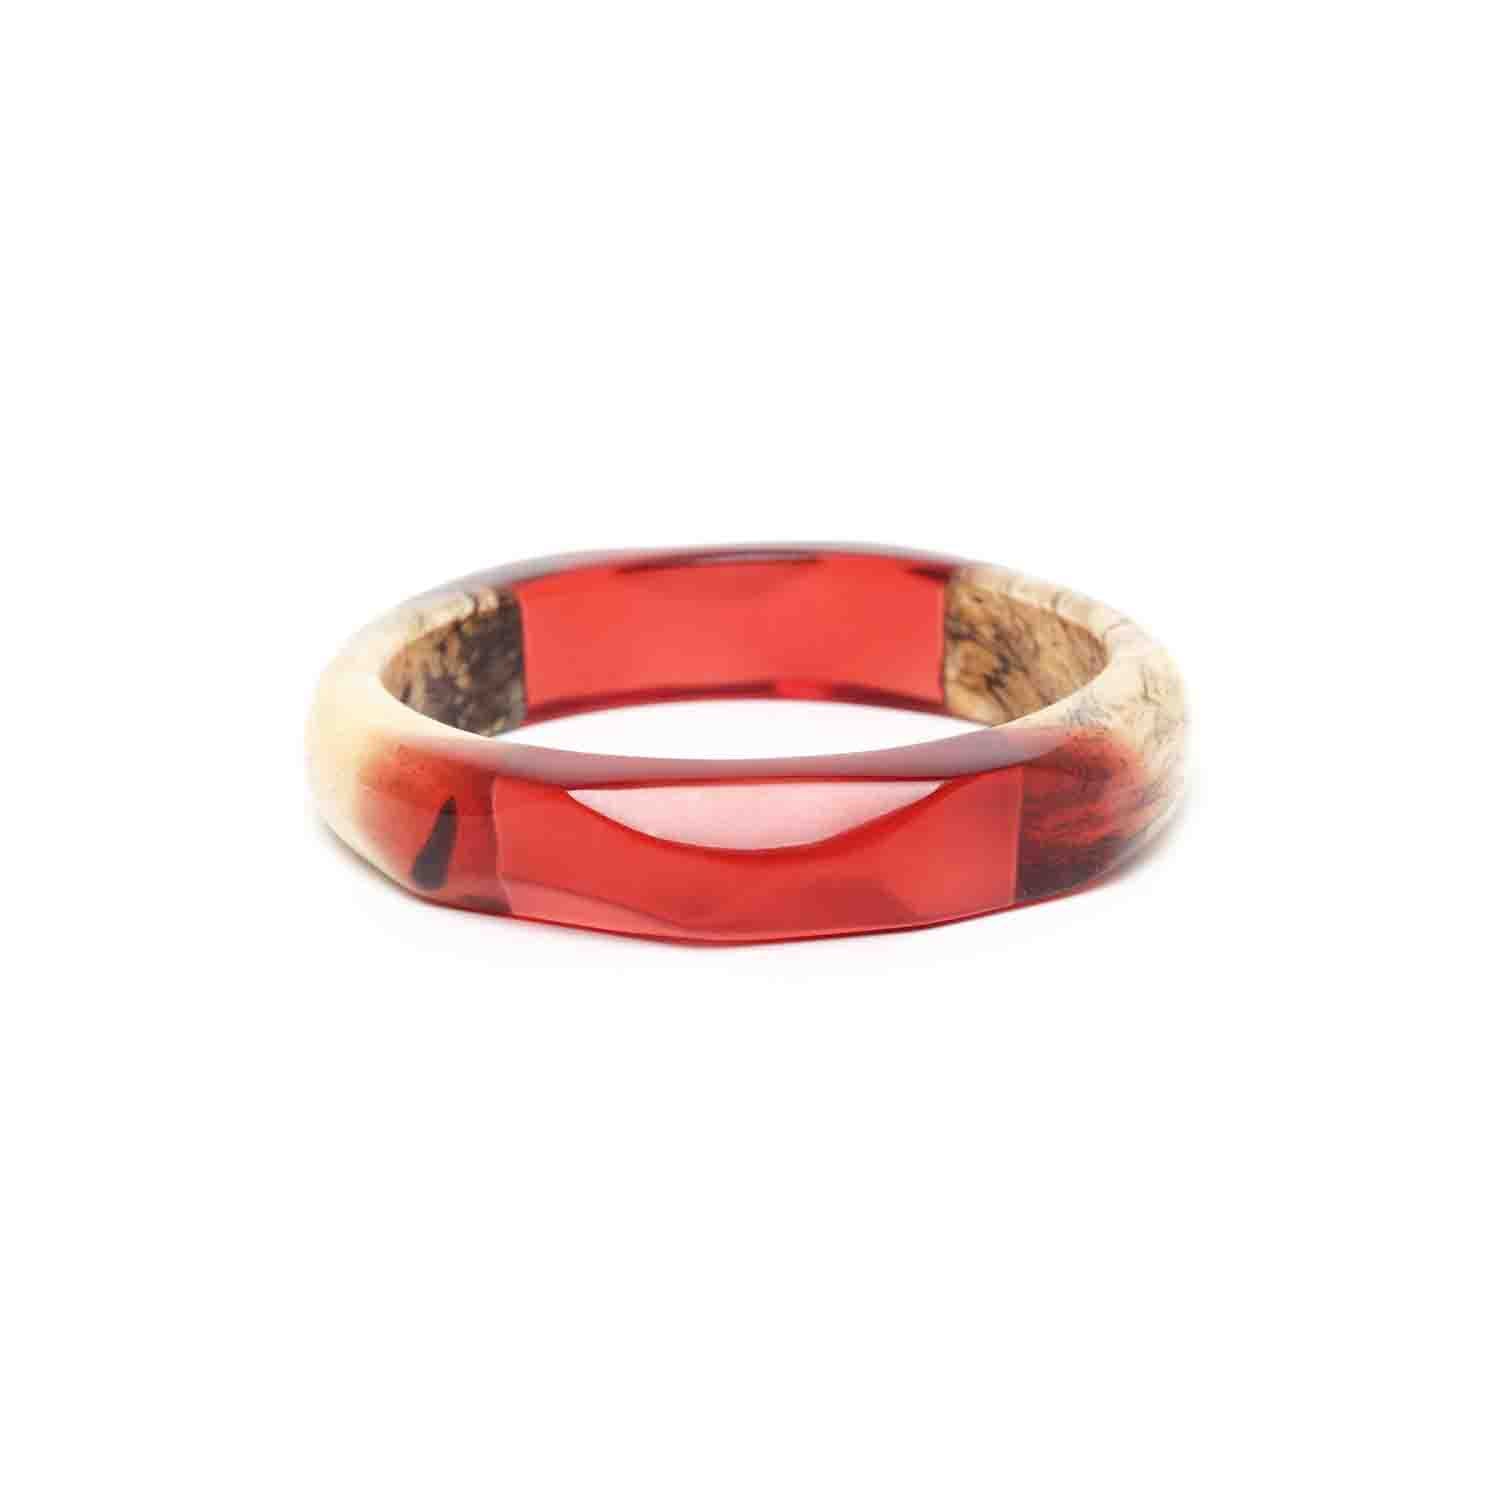 Nature Bijoux Bangle Bracelet / Tamarind, Eco Resin / Red, Beige / Natural Materials / Sweet Amber-1